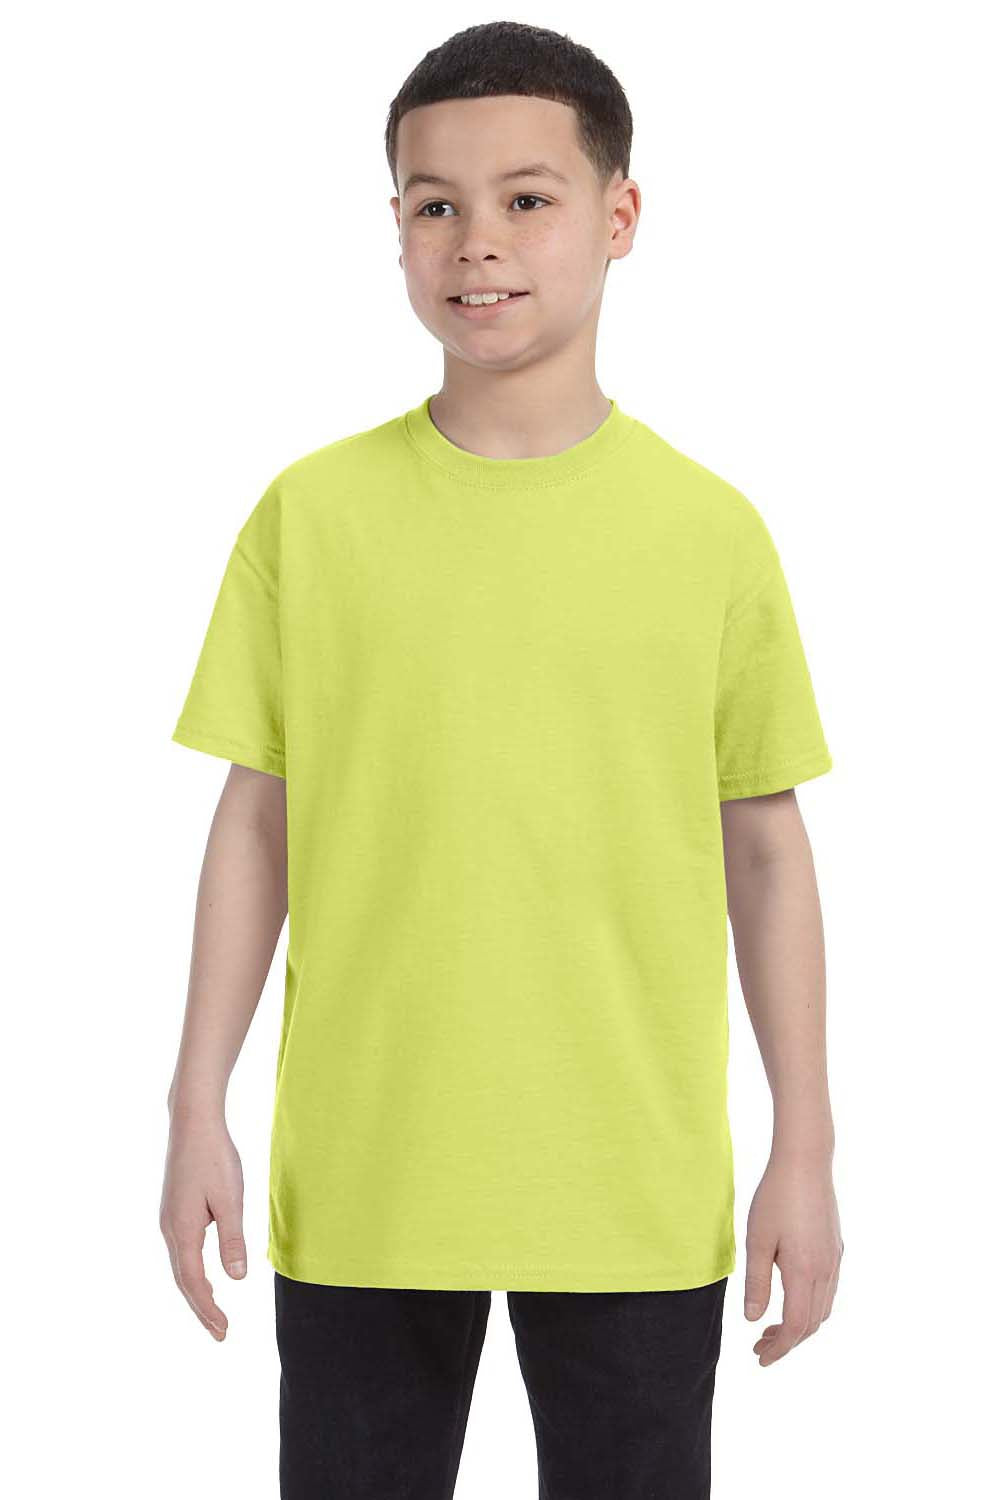 Jerzees 29B Youth Dri-Power Moisture Wicking Short Sleeve Crewneck T-Shirt Safety Green Front